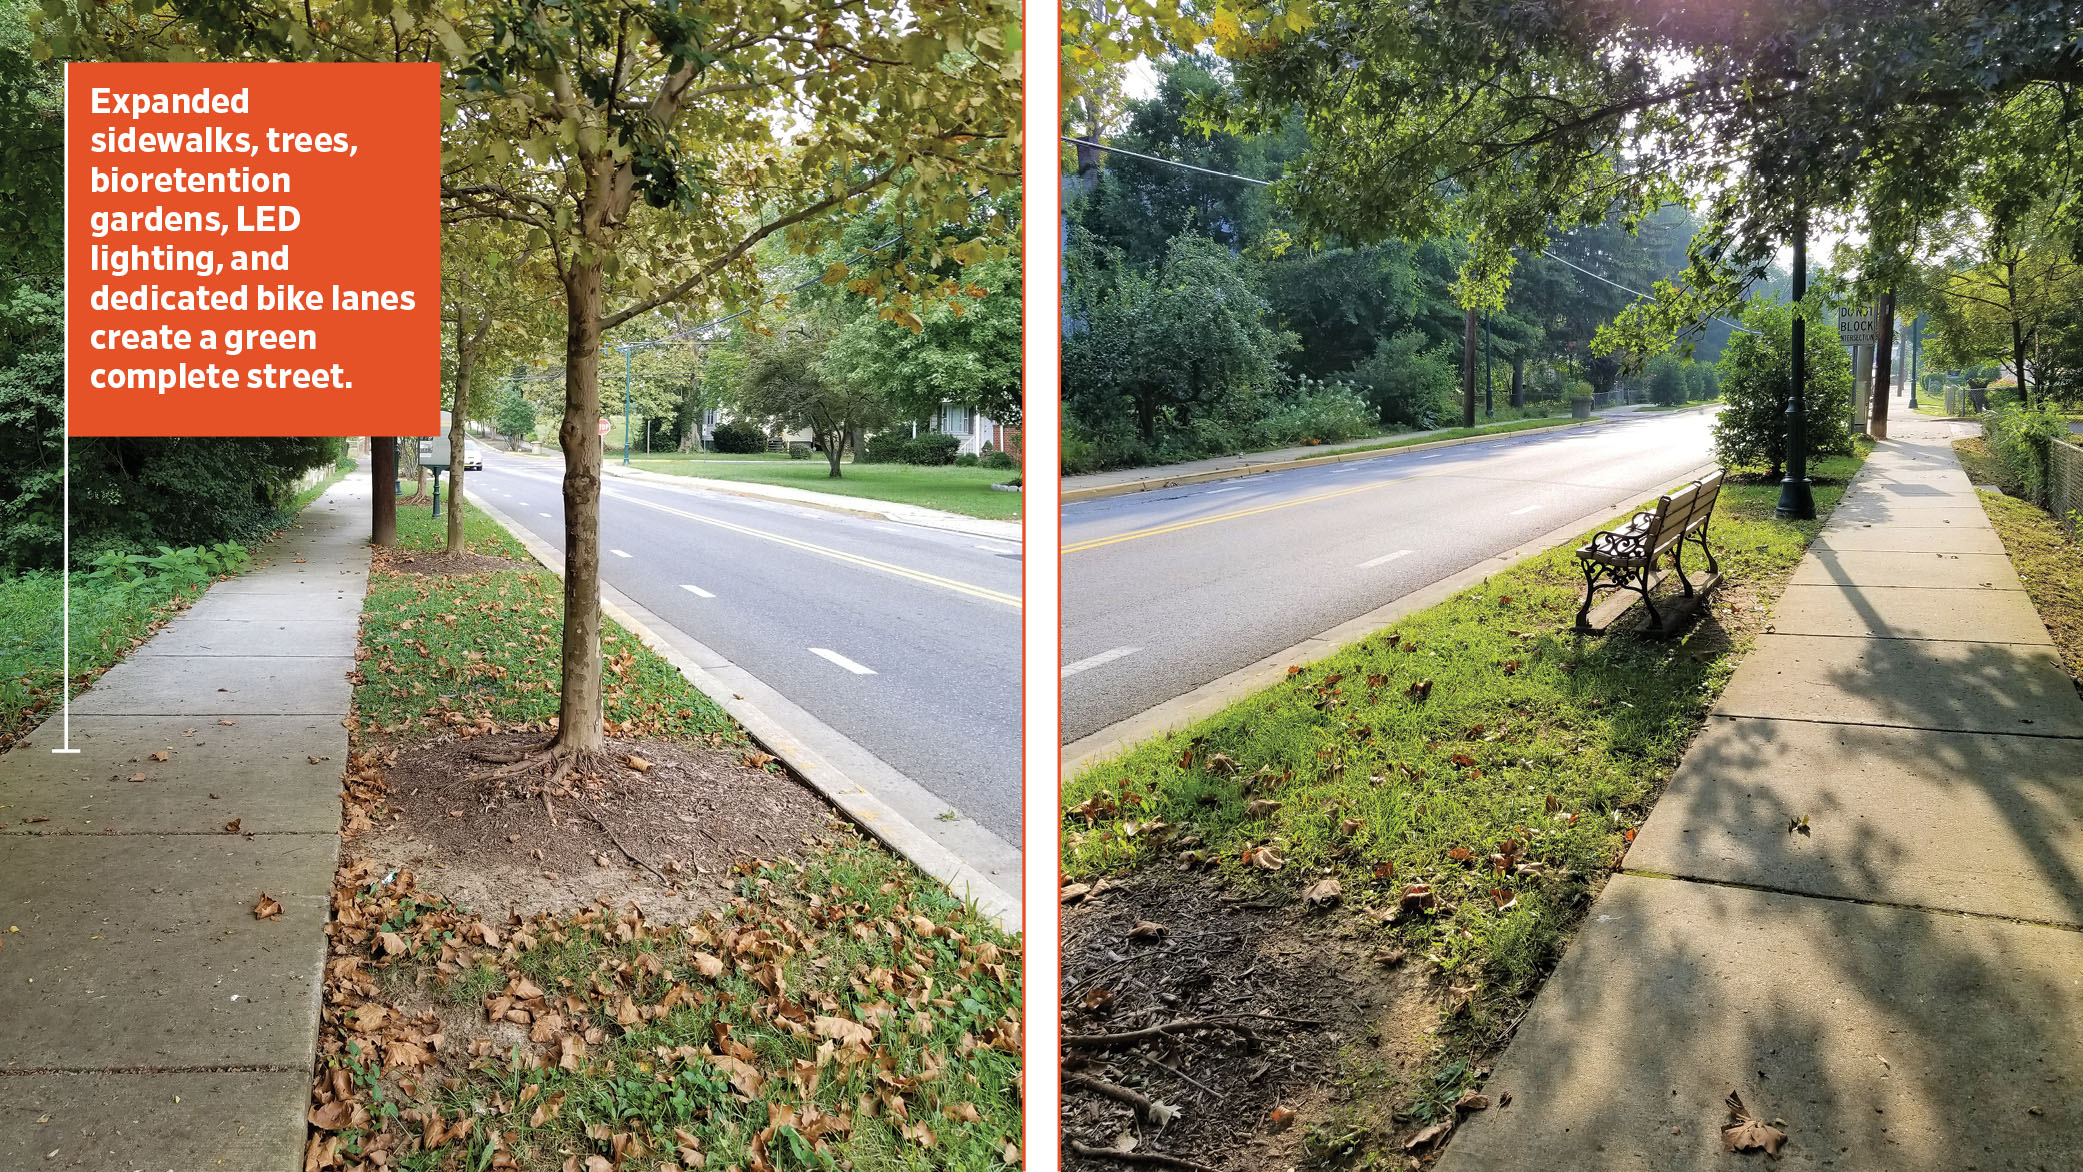 Decatur Avenue in Edmonston, Maryland, features LED lighting, bioretention gardens, dedicated bike lanes, and ADA-compliant pedestrian walkways.